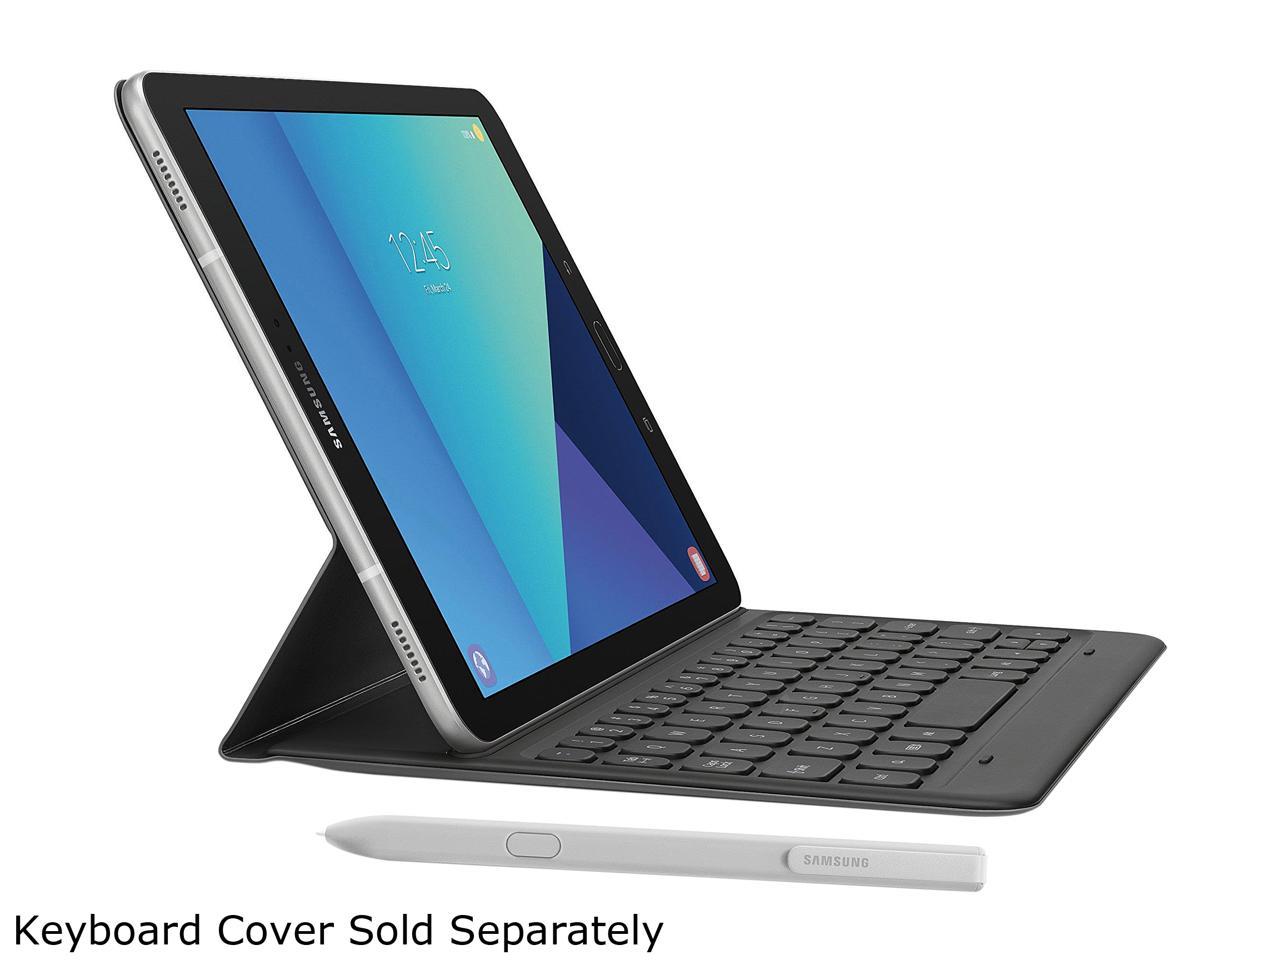 SAMSUNG Galaxy Tab S3 SM-T820NZSAXAR Qualcomm APQ8096 (2.15 GHz) 4 GB Memory 32 GB Flash Storage 9.7" 2048 x 1536 Tablet with S Pen Android 7.0 (Nougat) Silver